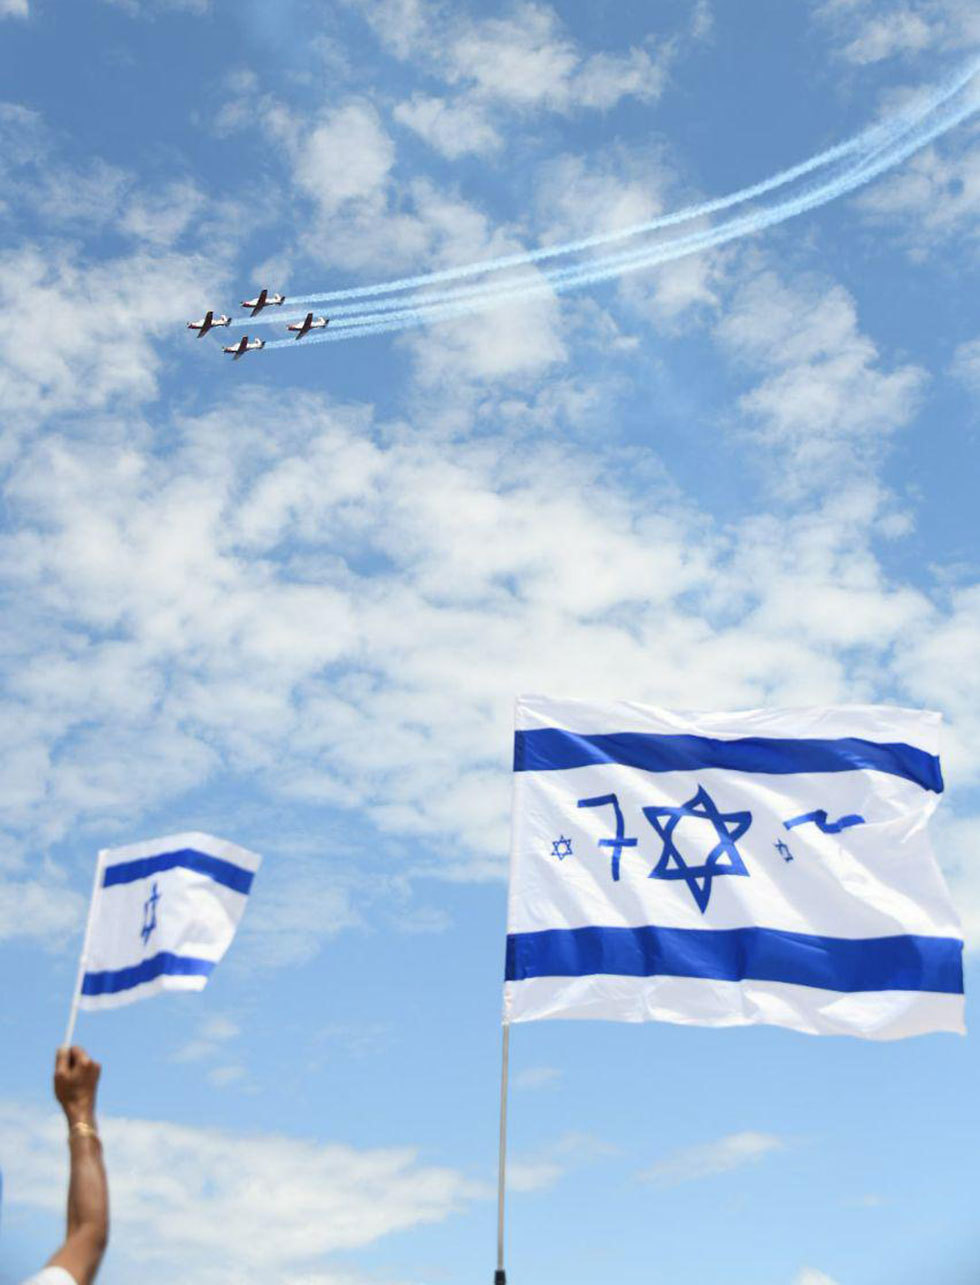 Воздушный парад в небе над Израилем. Фото: Яир Саги (Photo: Yair Sagi)